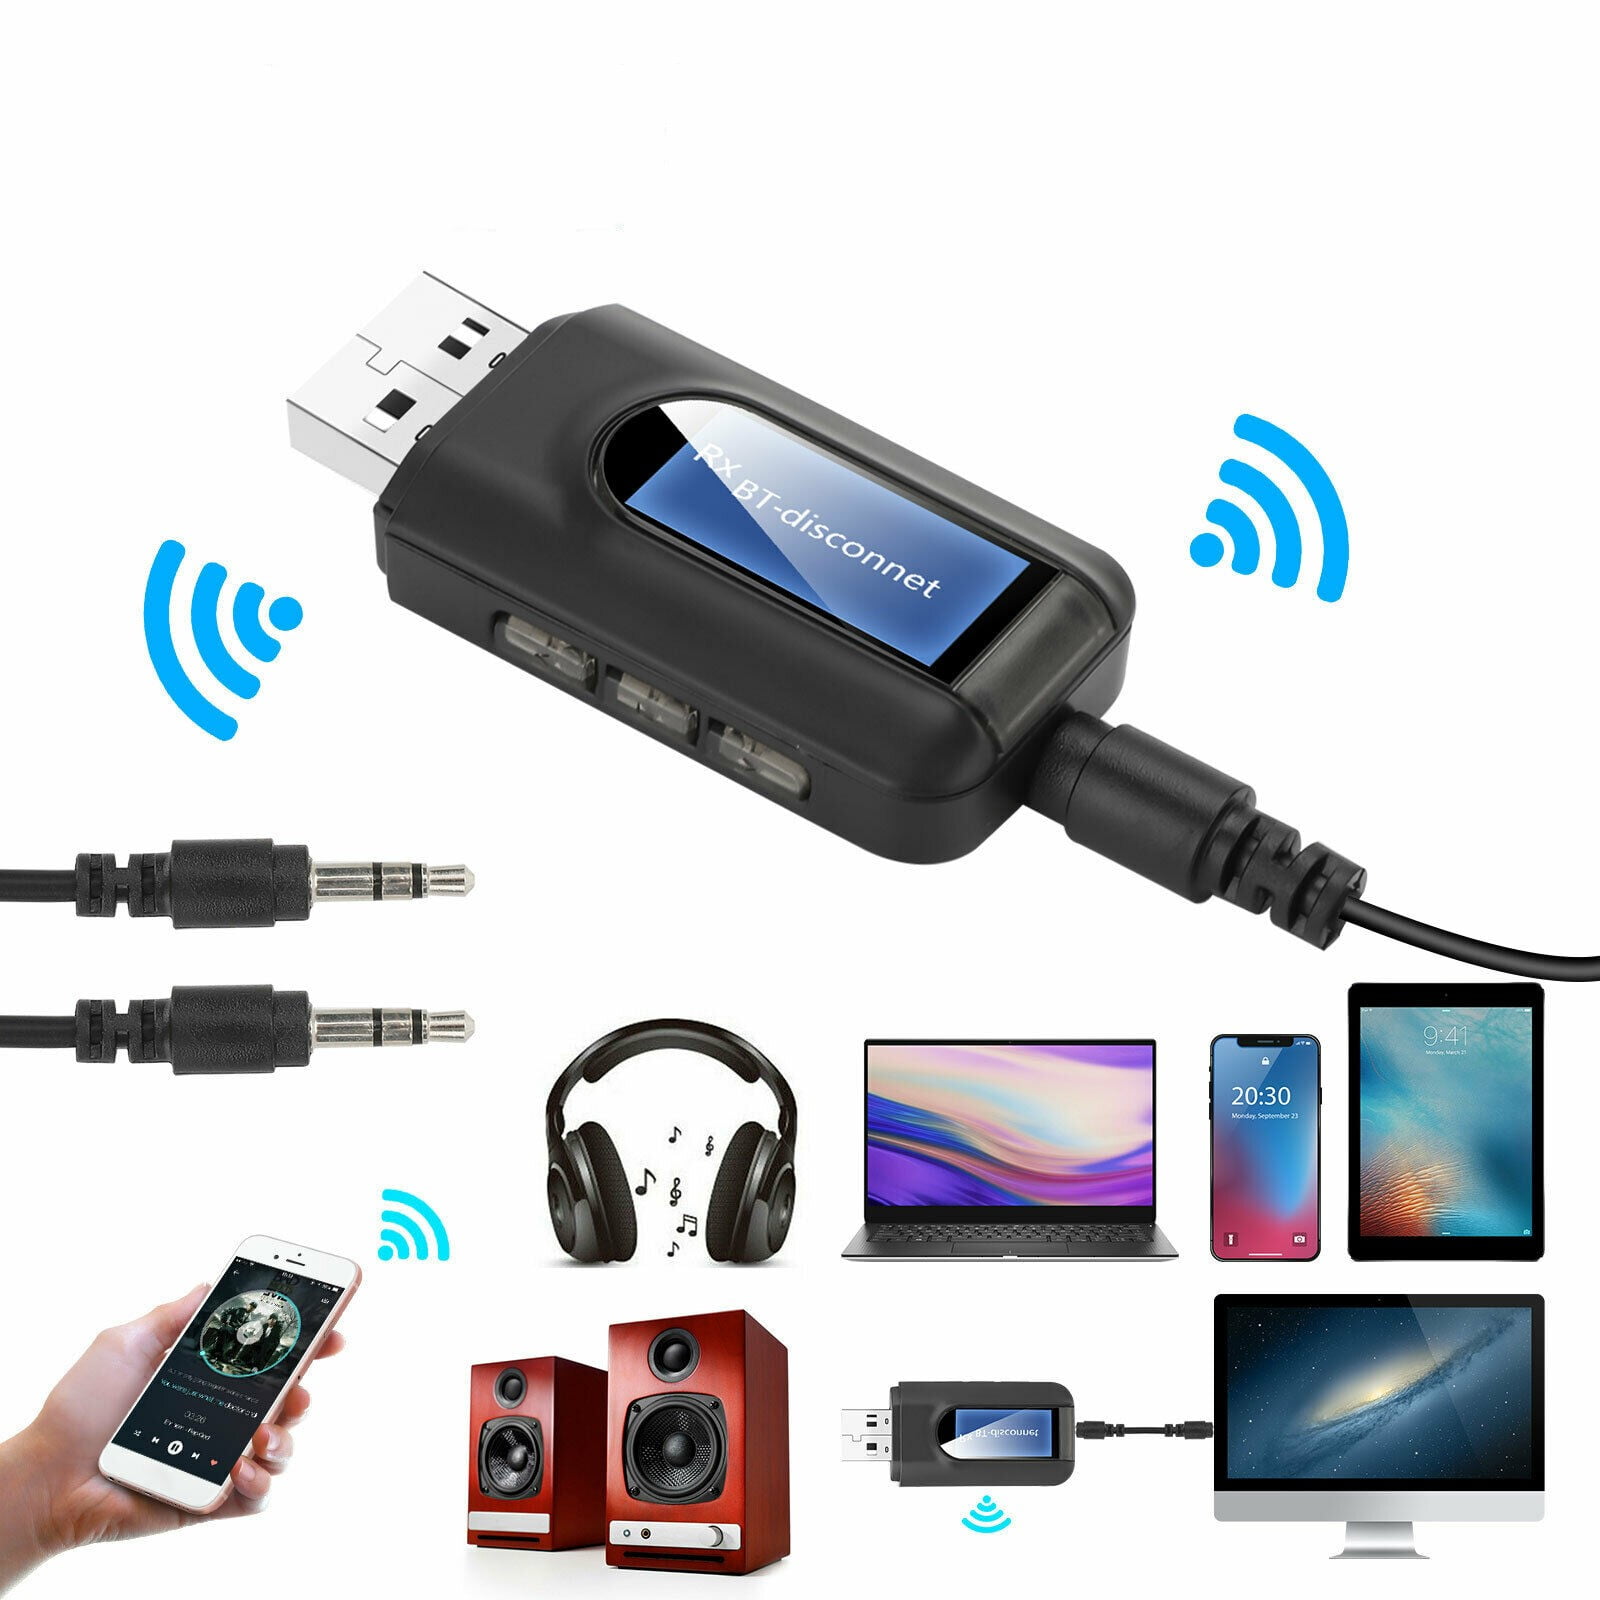 Car 2-in-1 Transmitter Receiver Wireless Audio USB Bluetooth FM Adapter 5.0 VU 